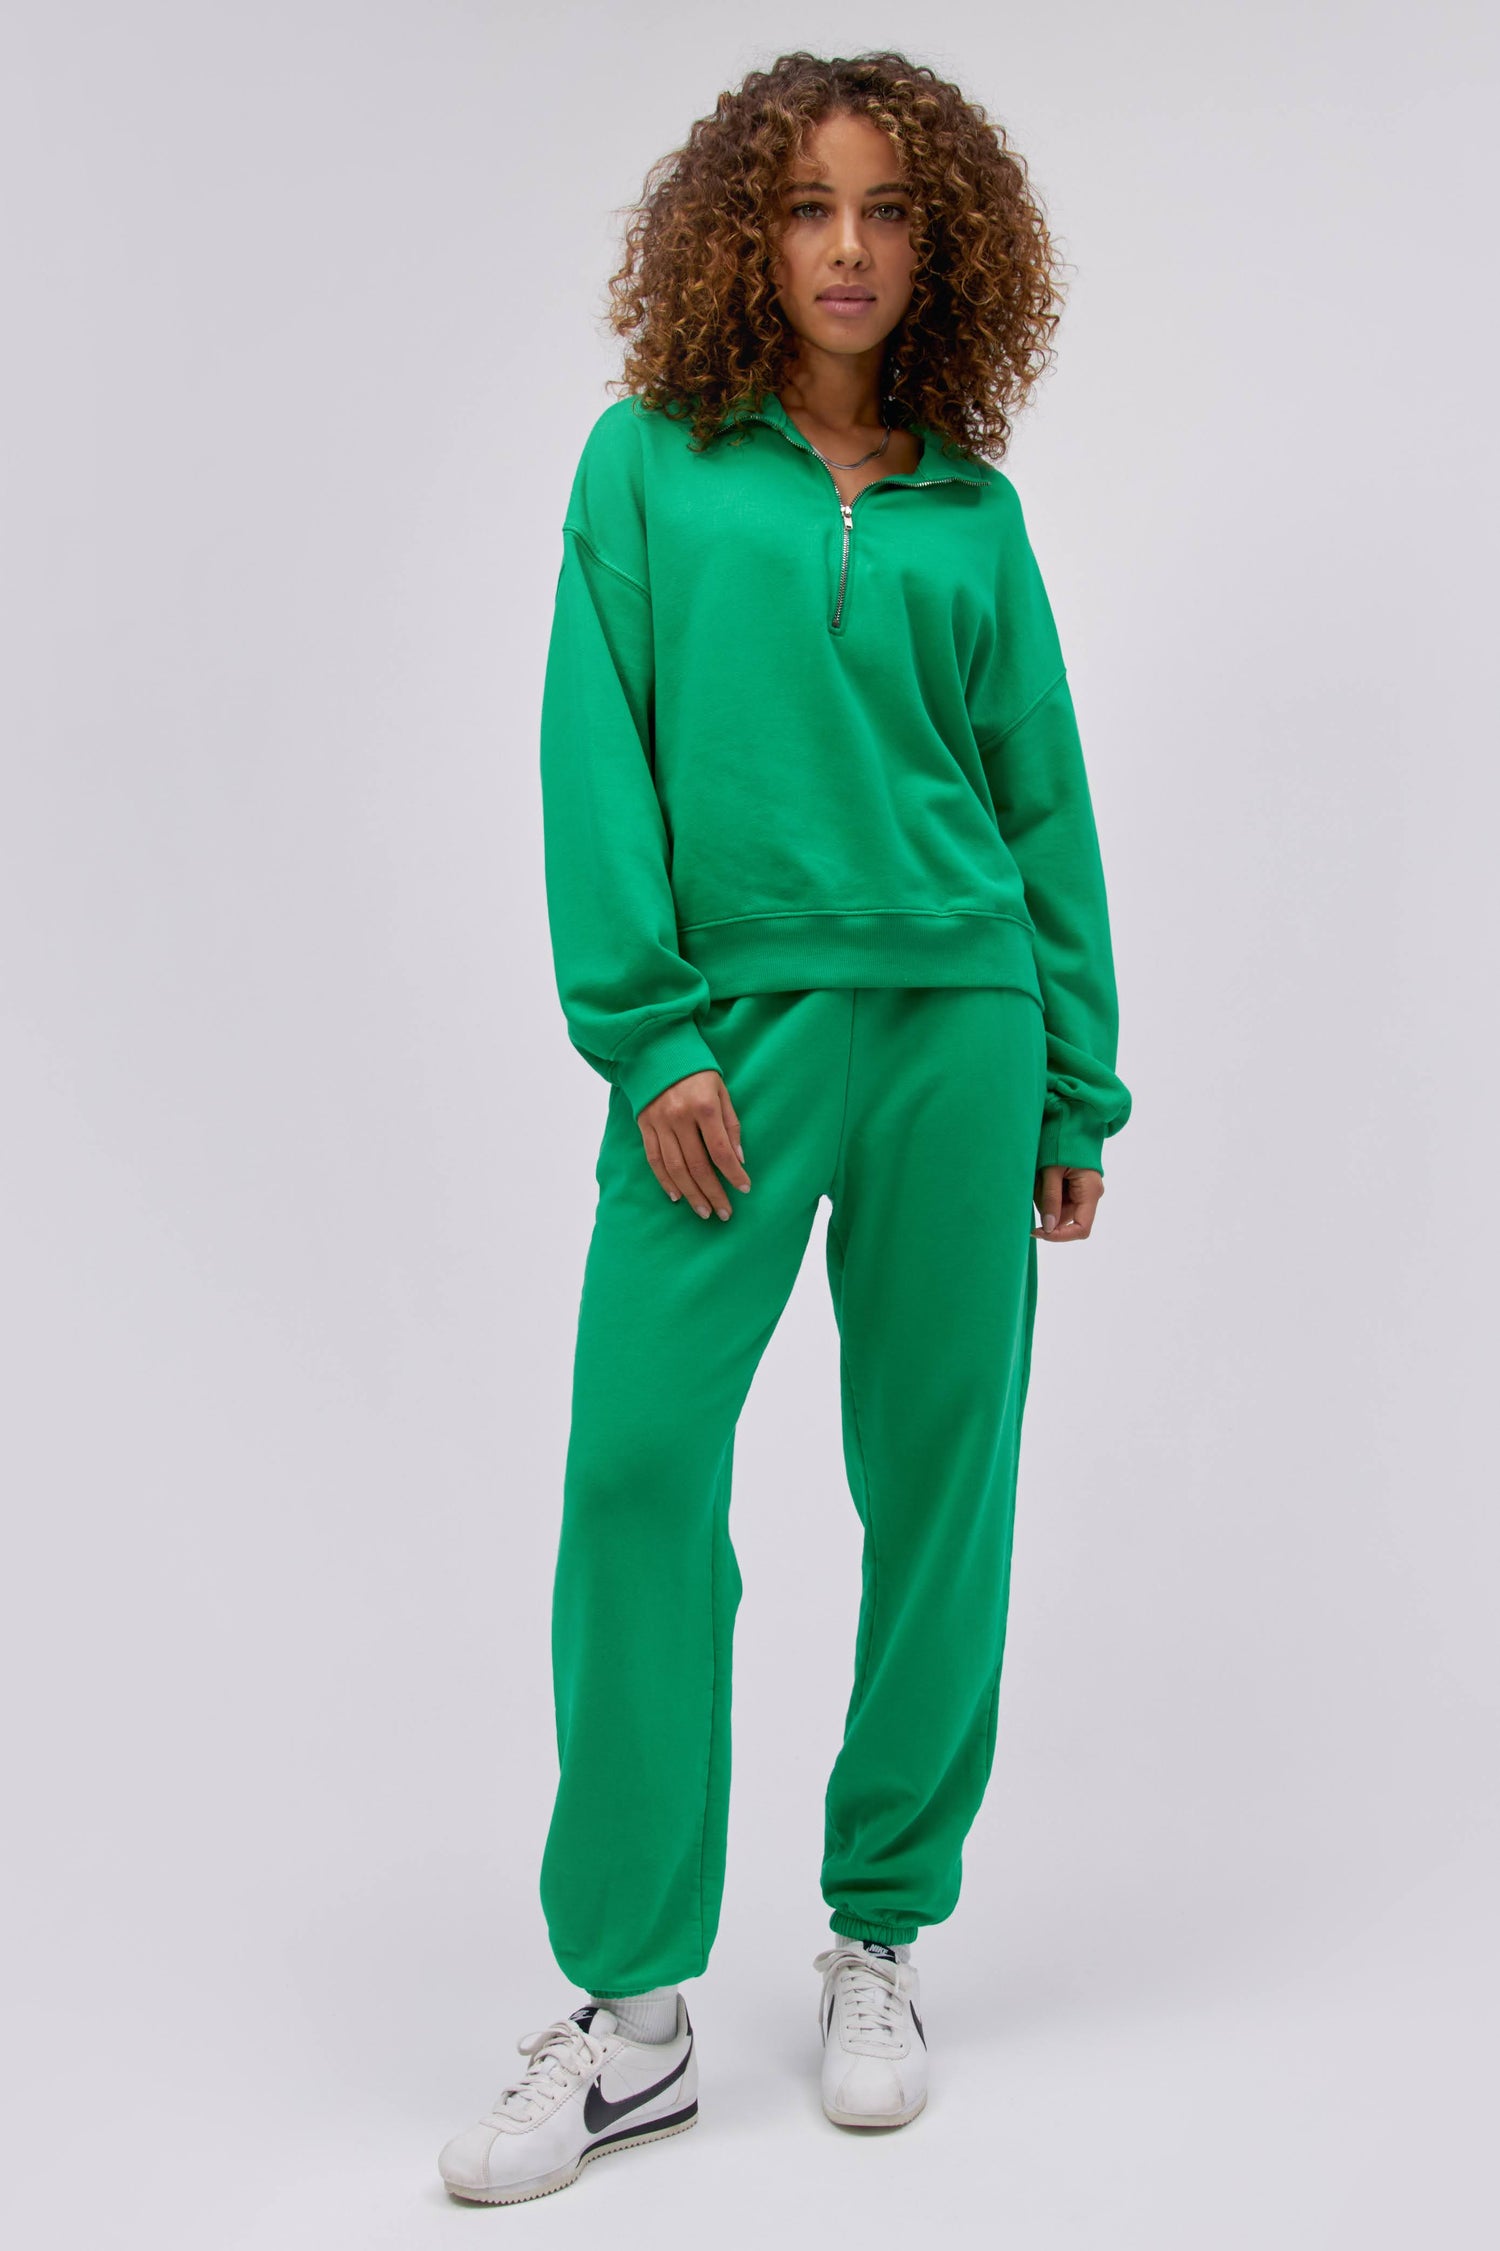 Model wearing a solid half zip sweatshirt in lucky green.